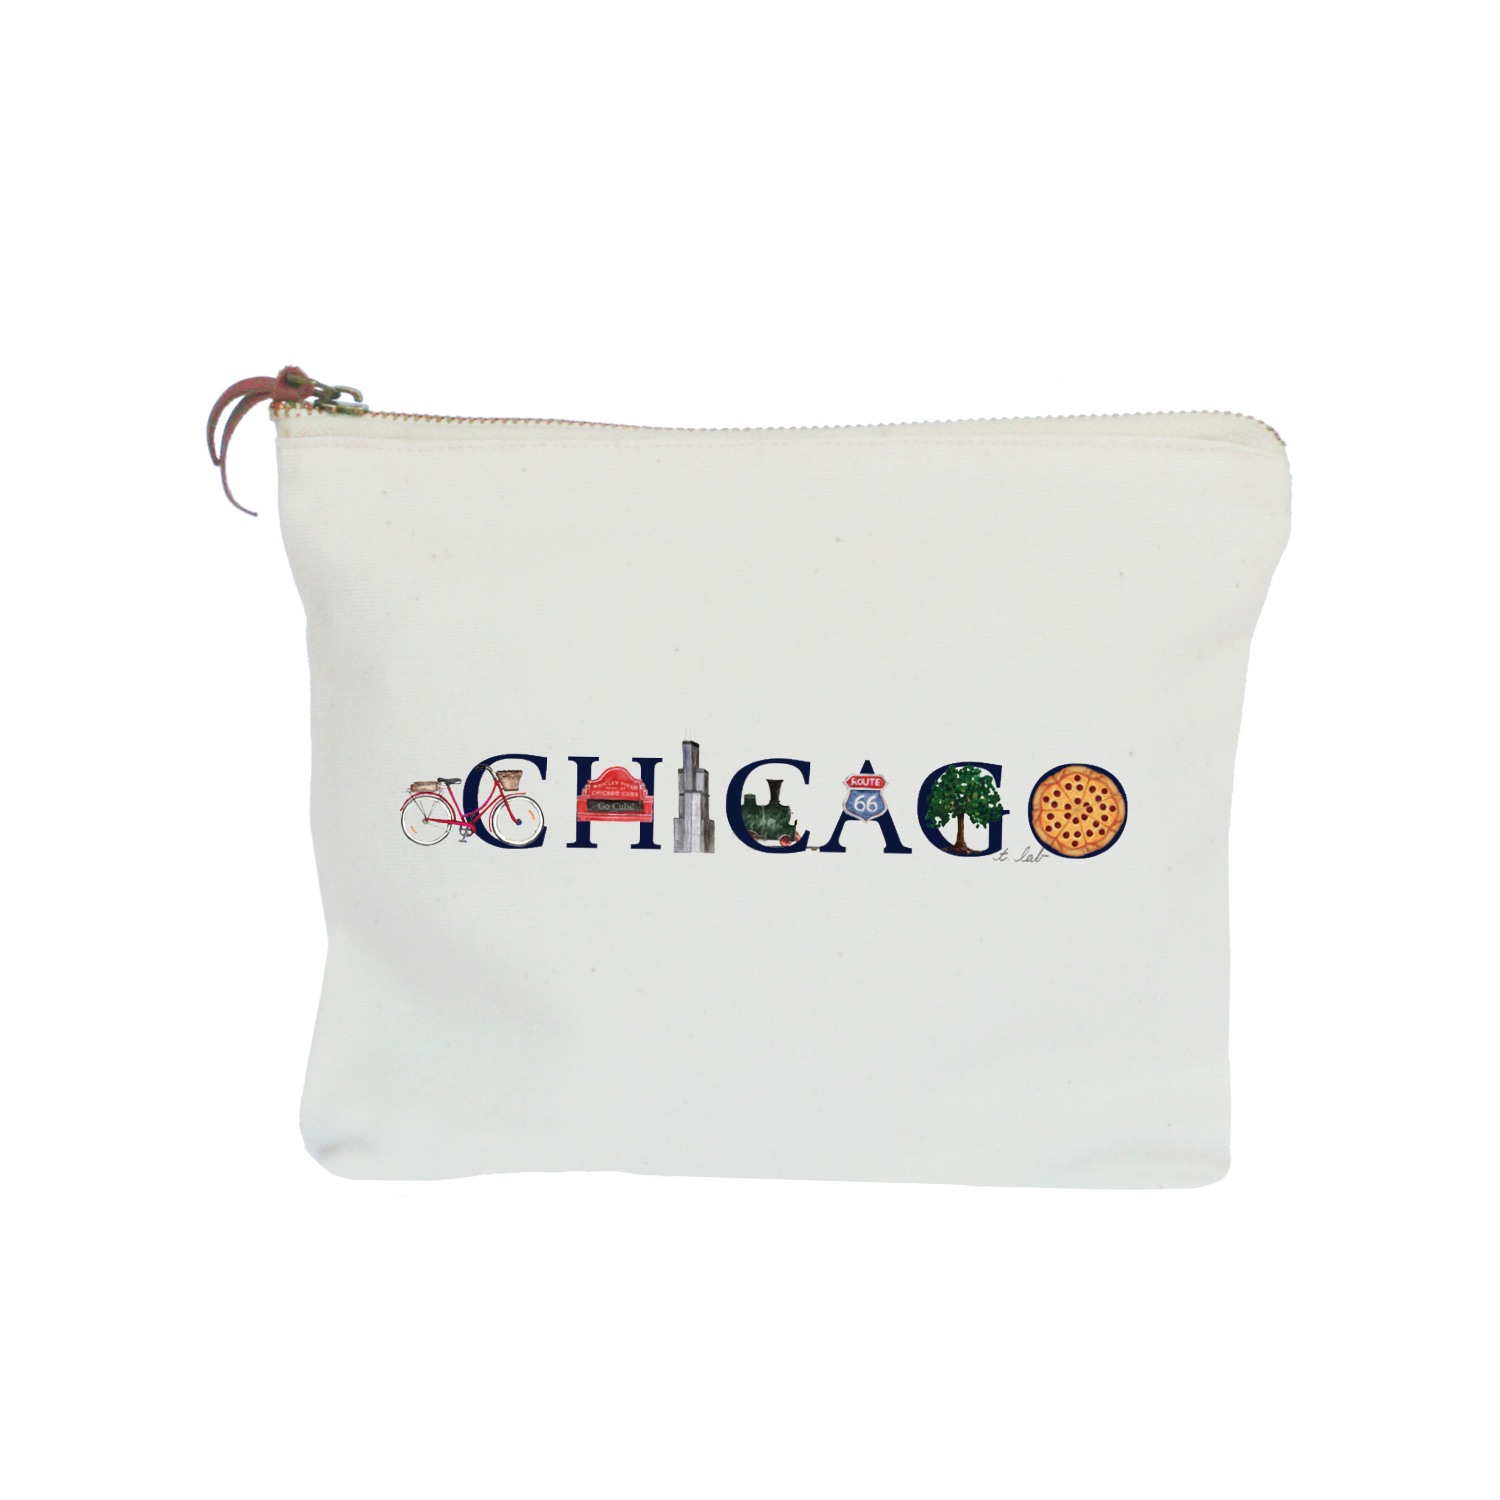 chicago zipper pouch